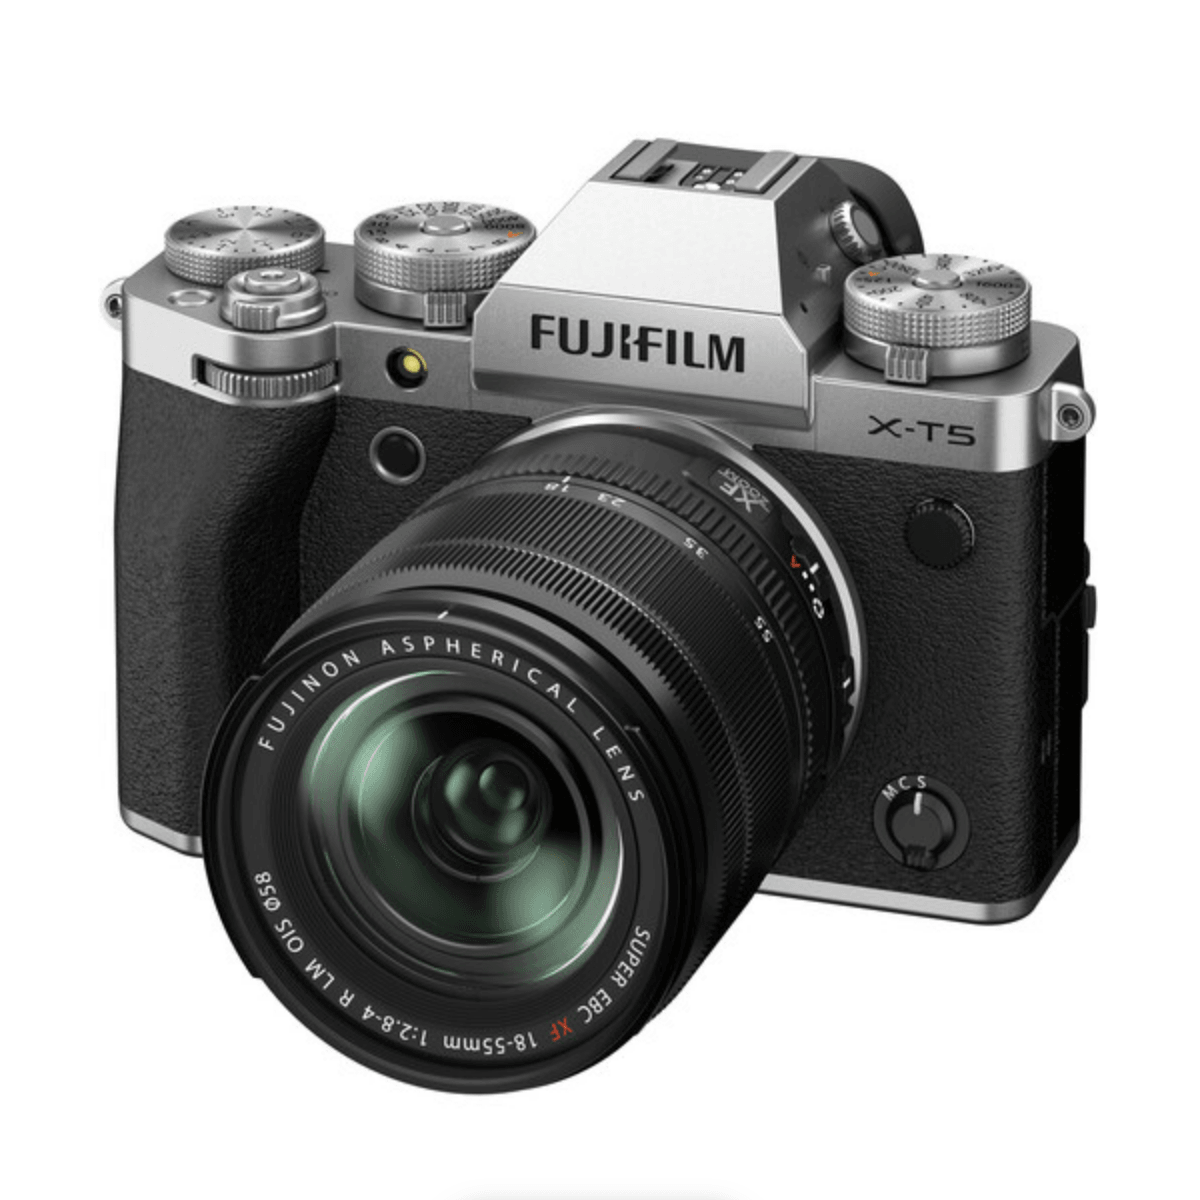 Fujifilm Fujinon XF 18-55 mm f/2.8-4 OIS review - Introduction 